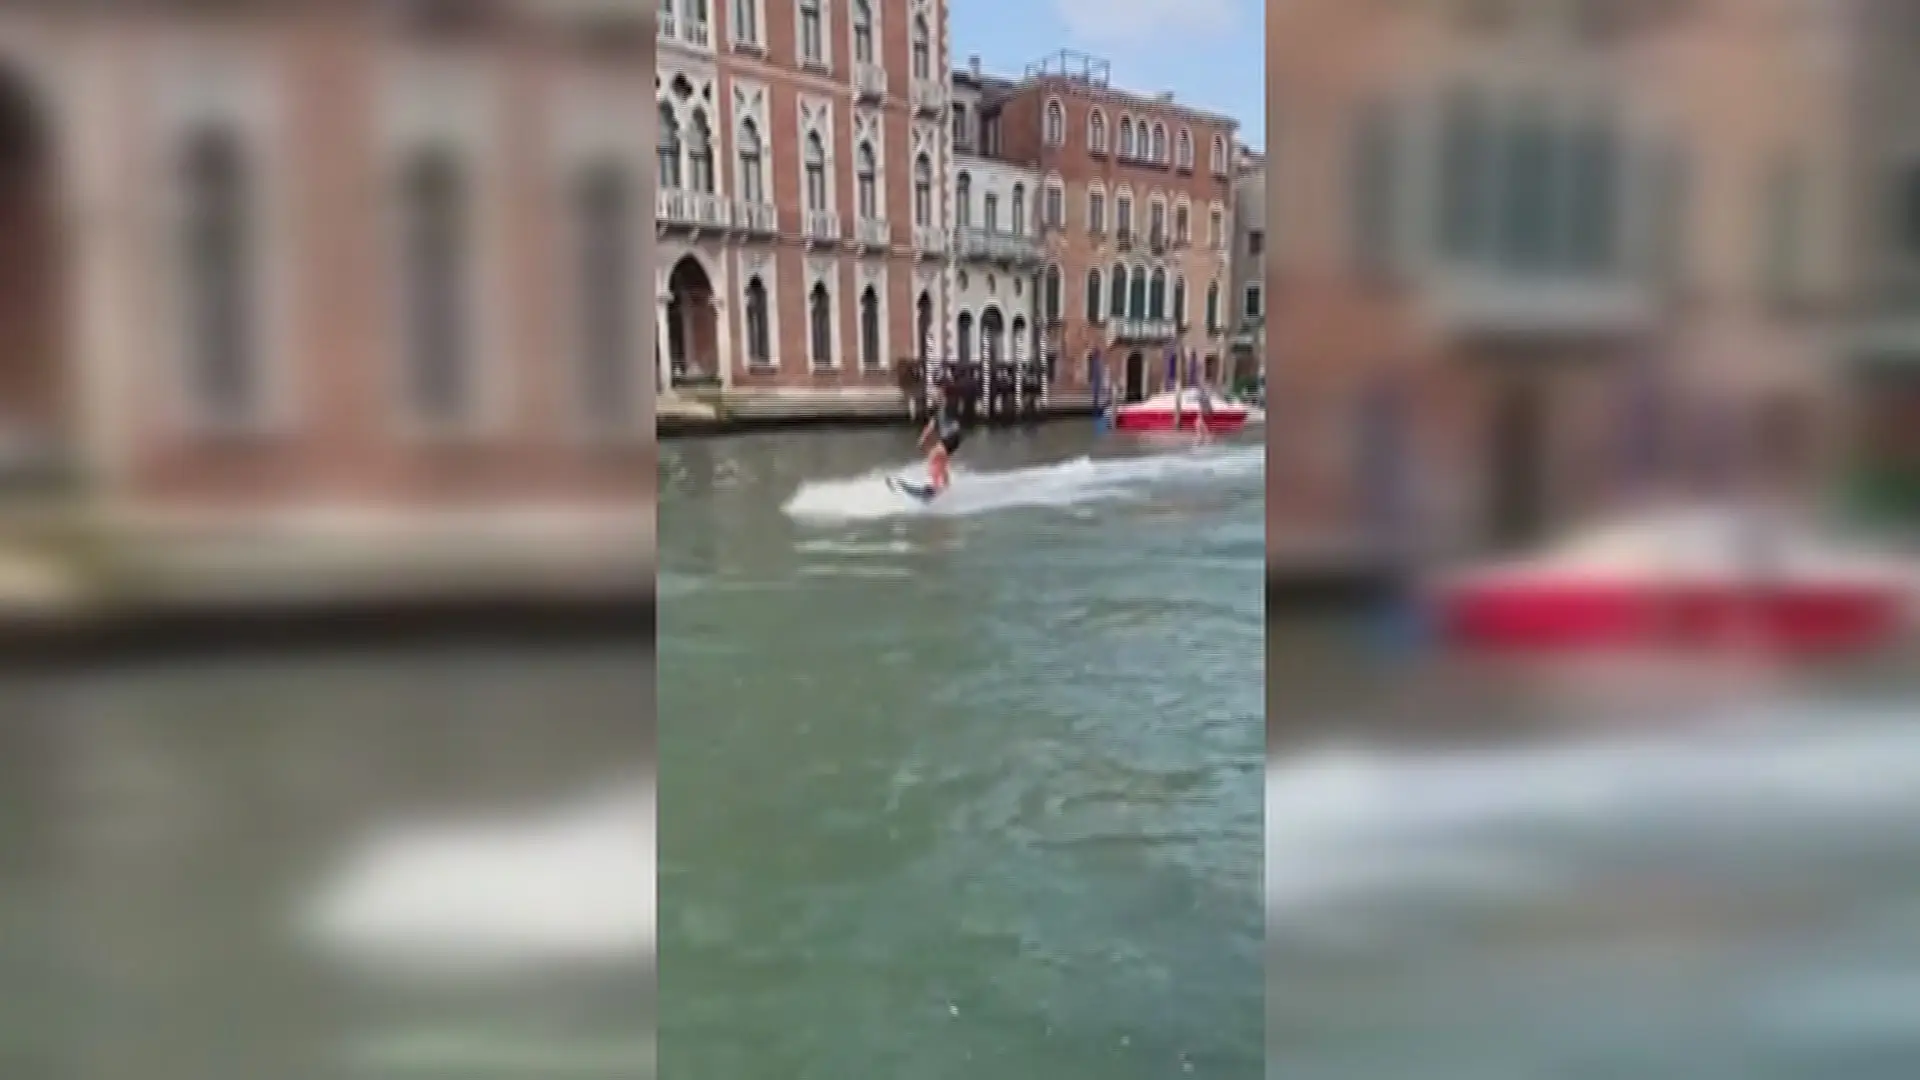 Veneza multa turistas "imbecis" por surfarem Grande Canal de Veneza